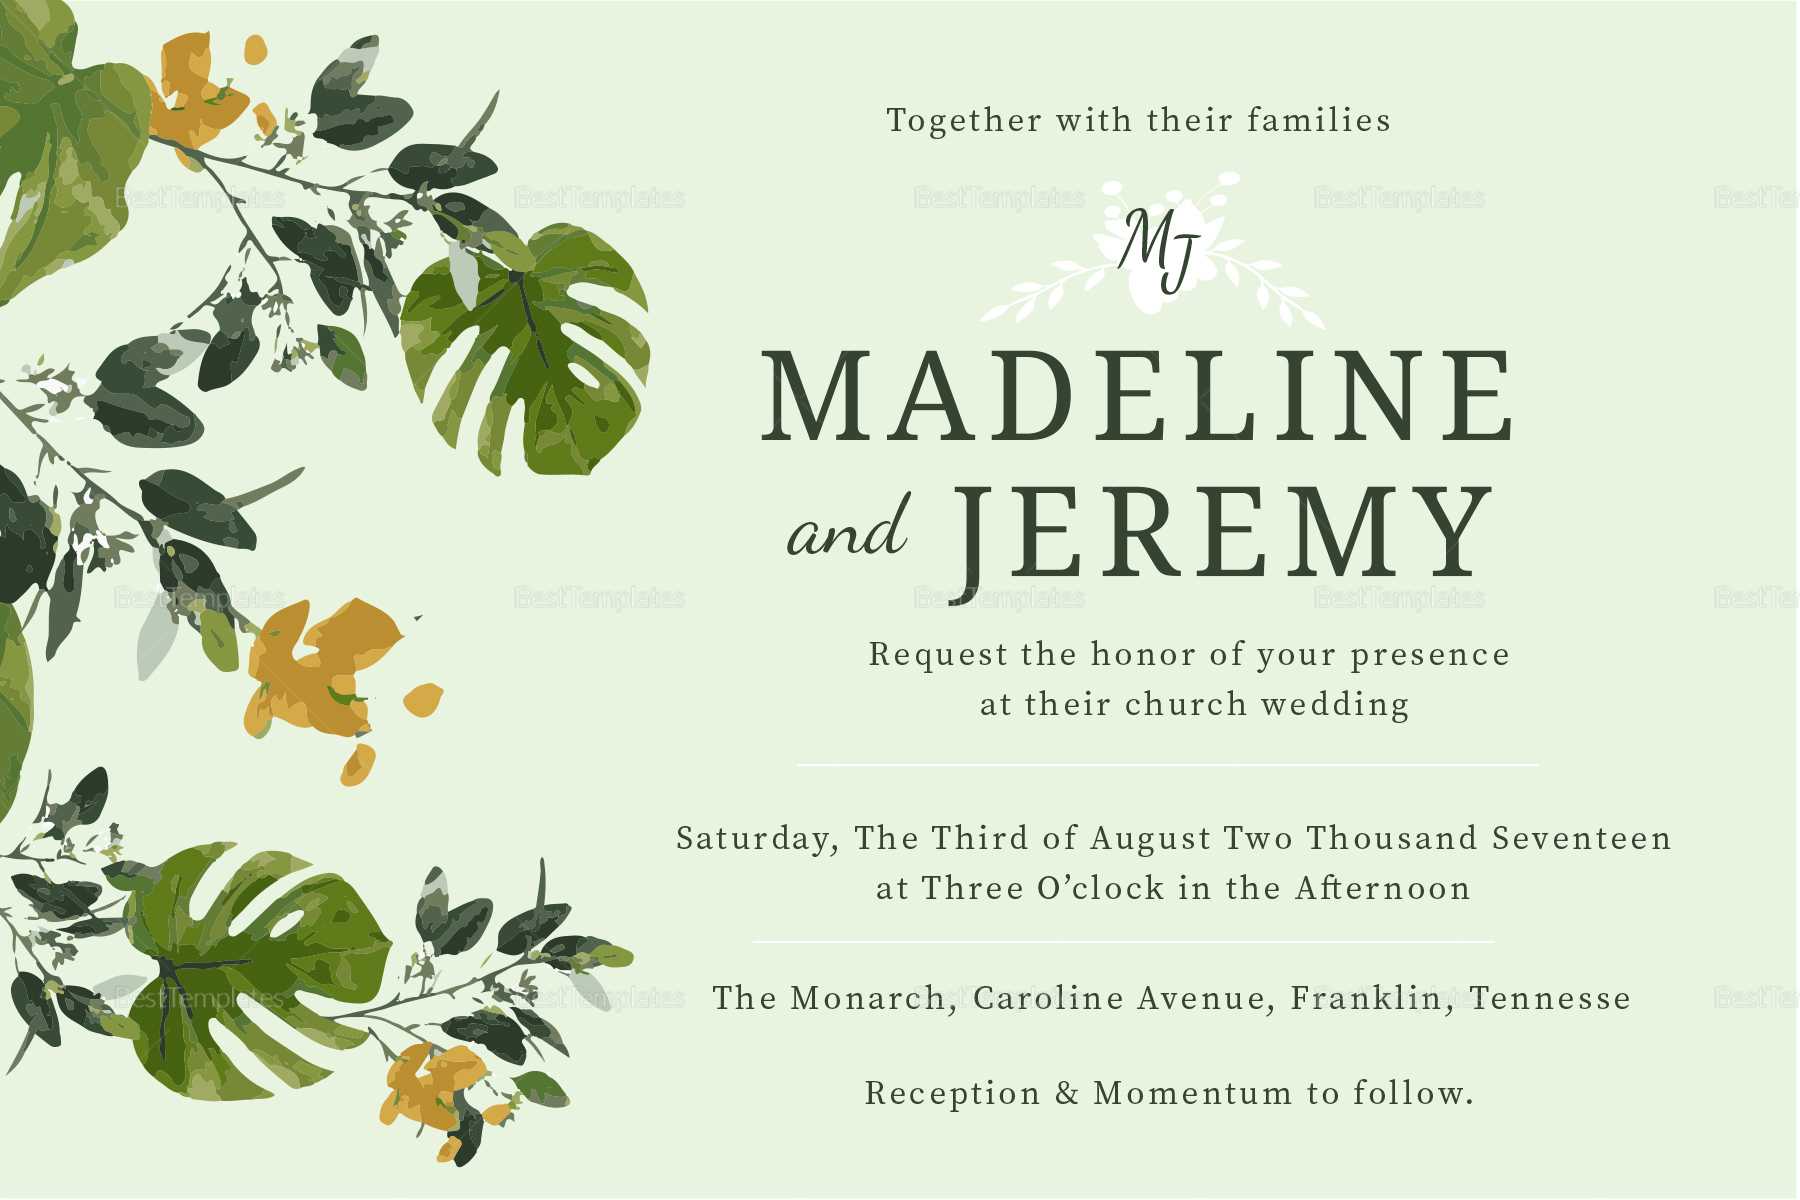 Church Wedding Invitation In Landscape And Portrait Inside Church Wedding Invitation Card Template